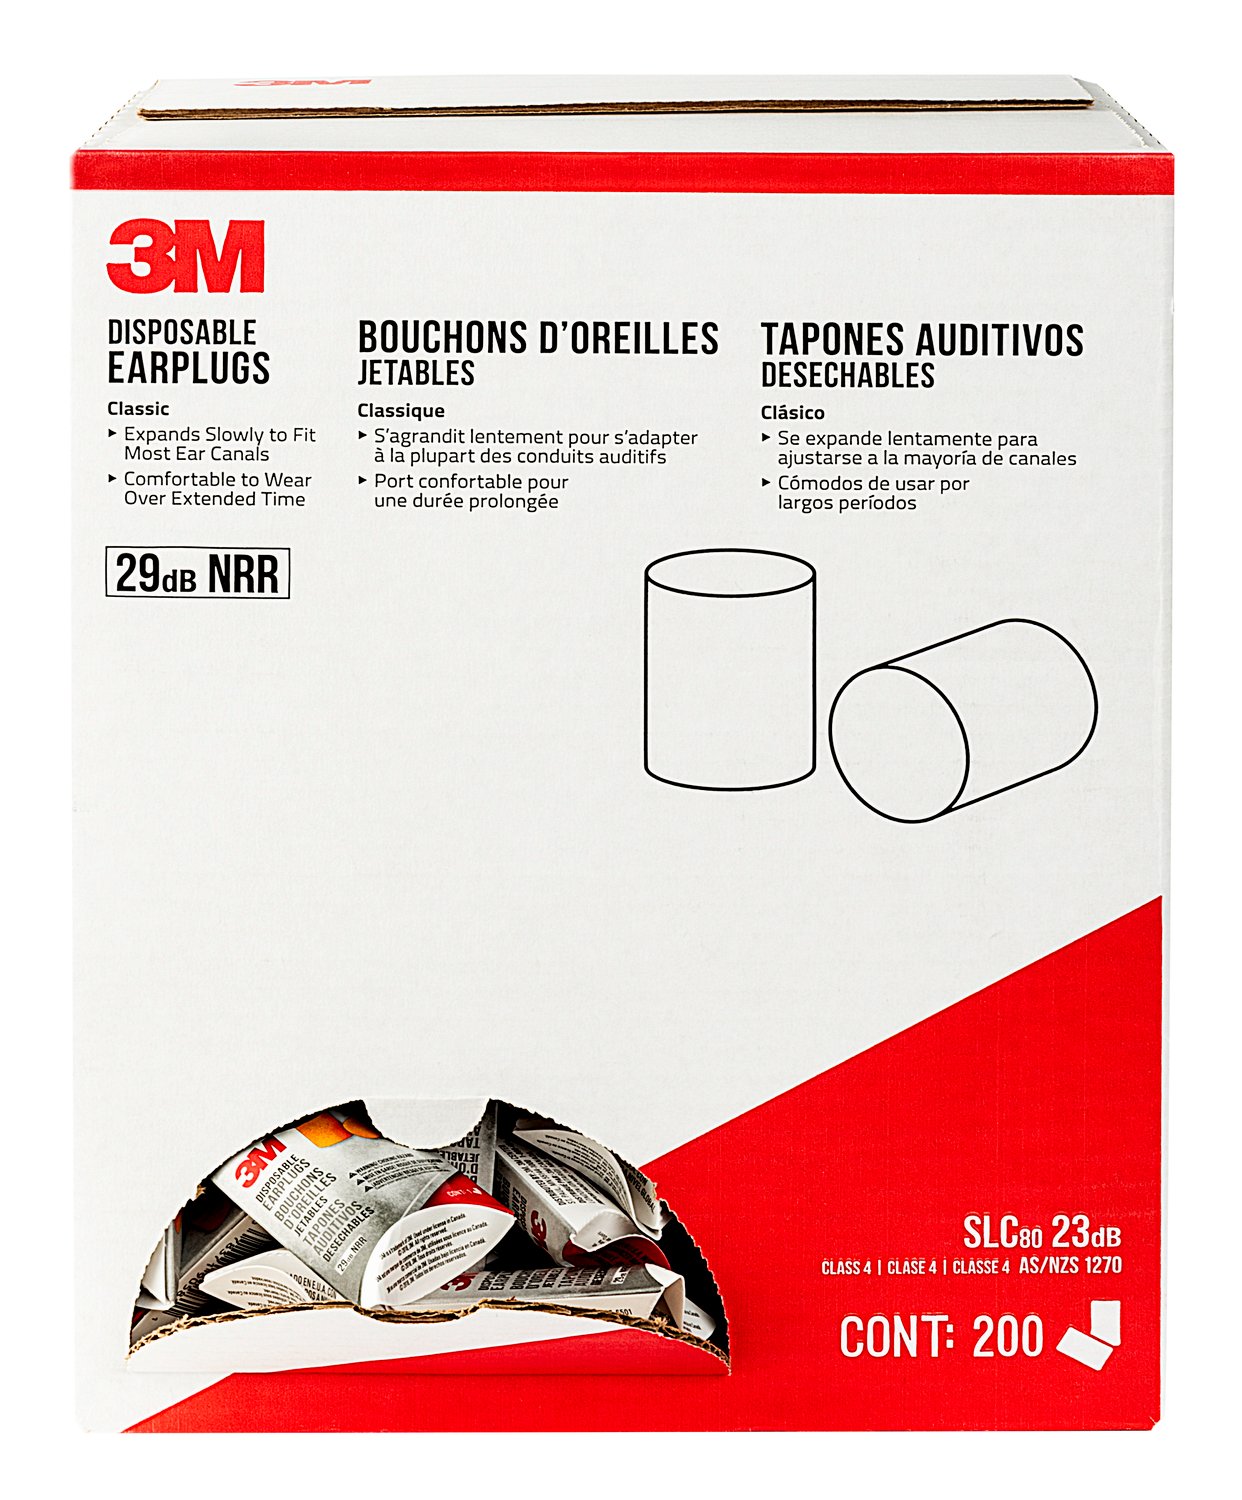 7100171311 - 3M Disposable Classic Earplugs, 90581H200-C, 1 pair/pack, 200
packs/case